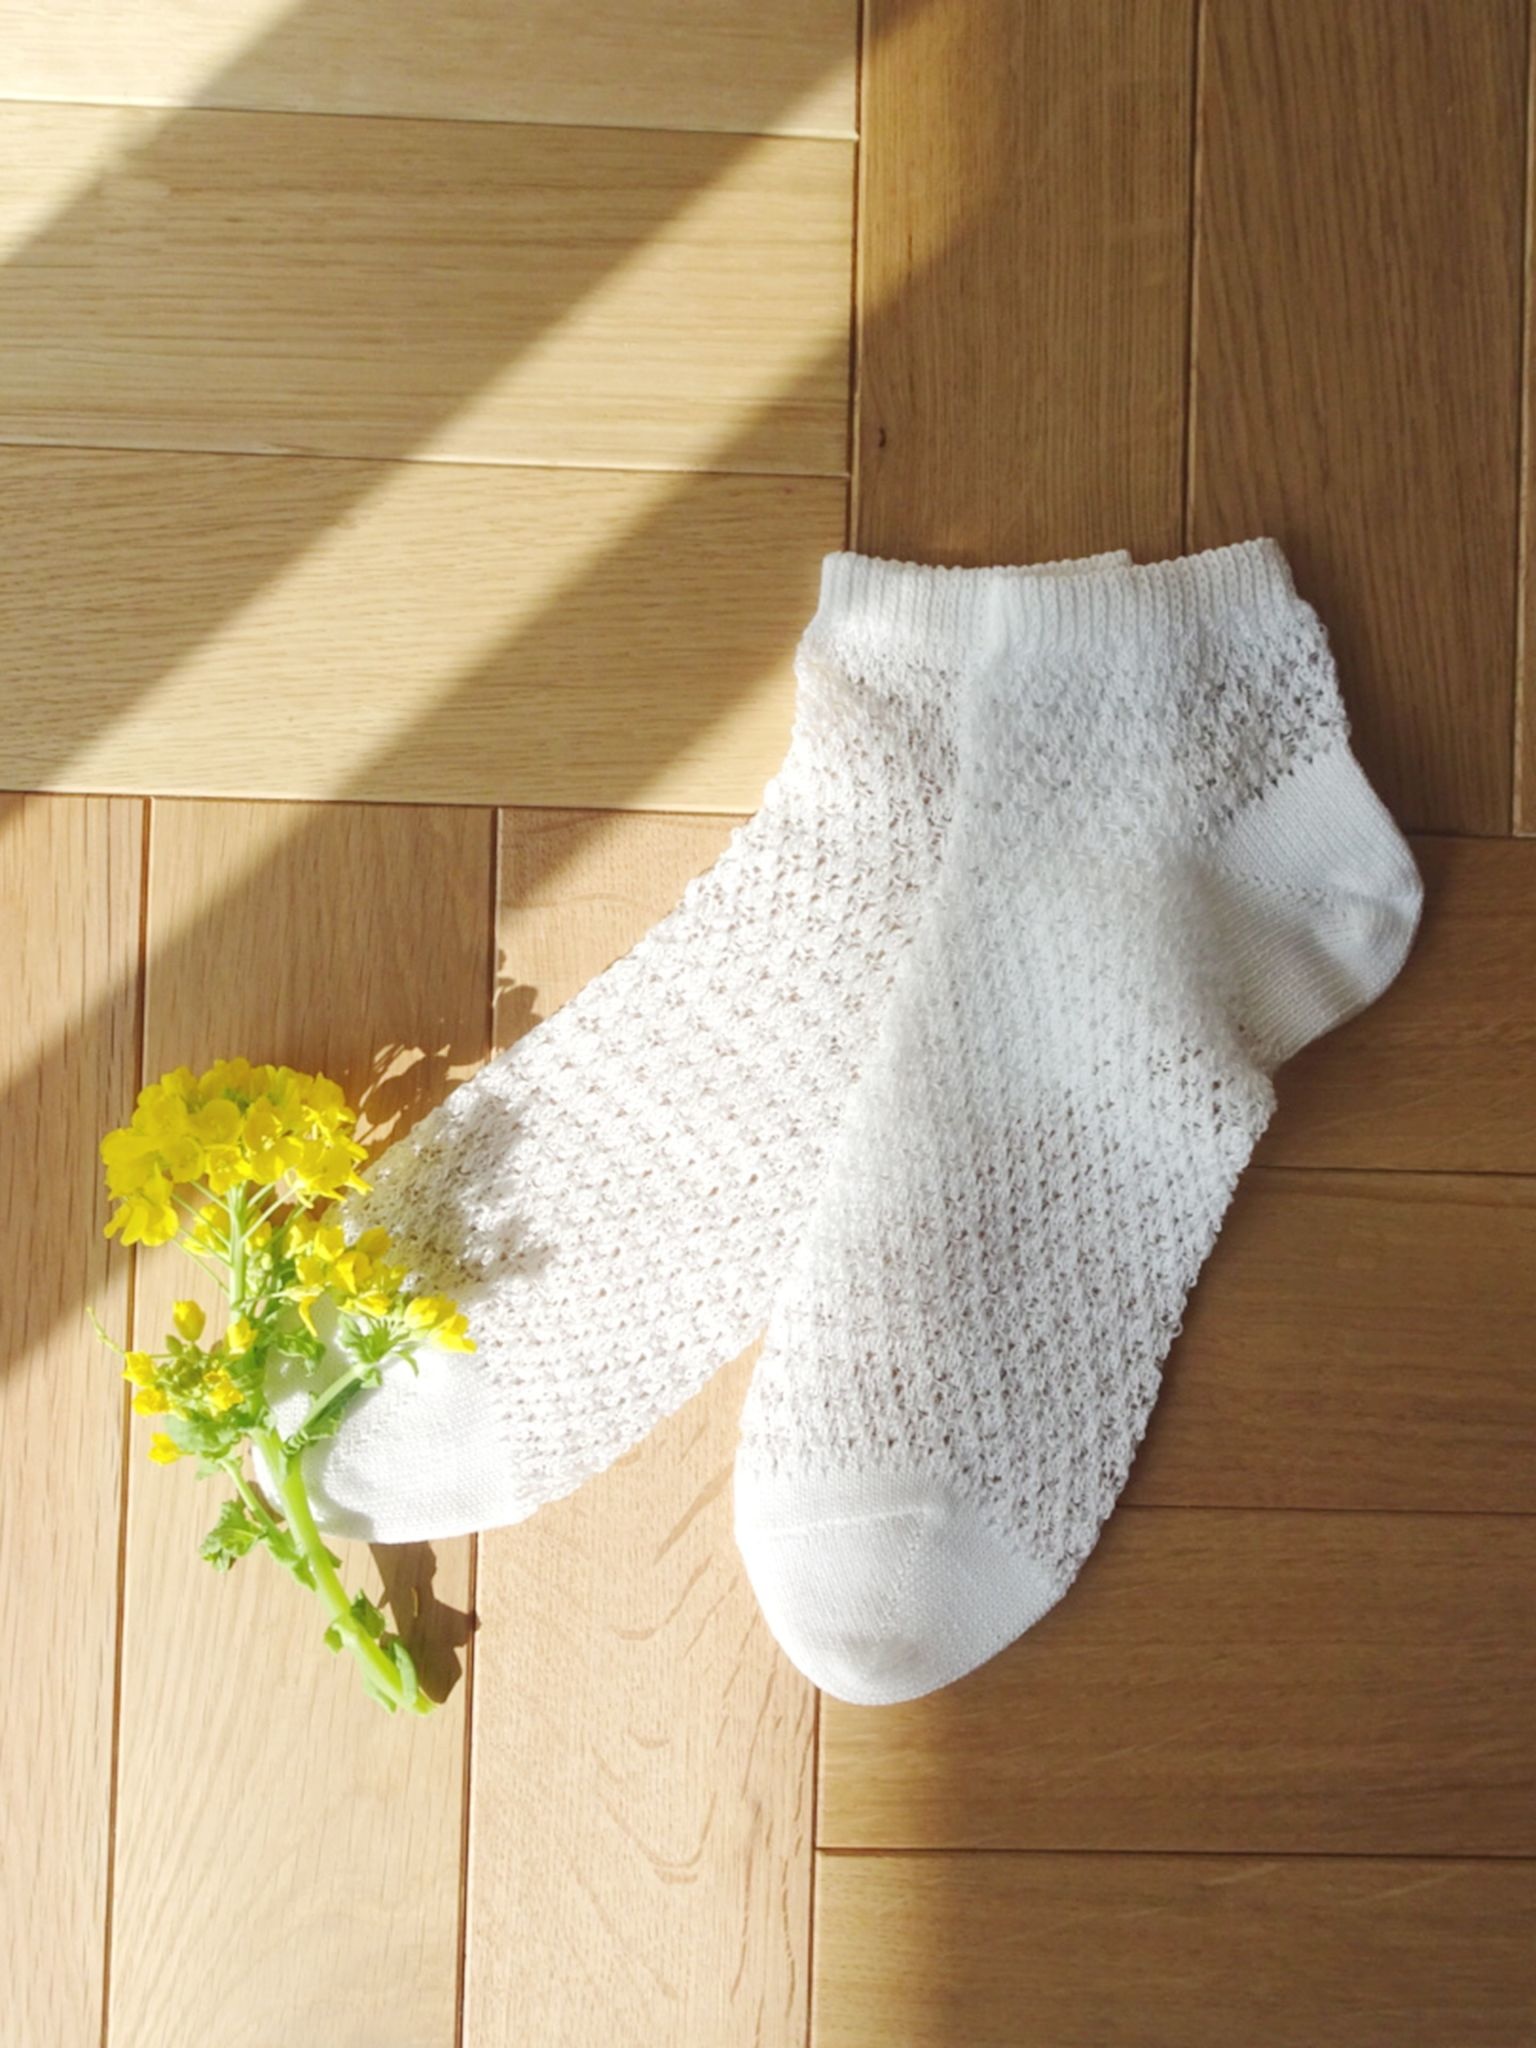 Openwork socks for Mother's Day gift 041131266